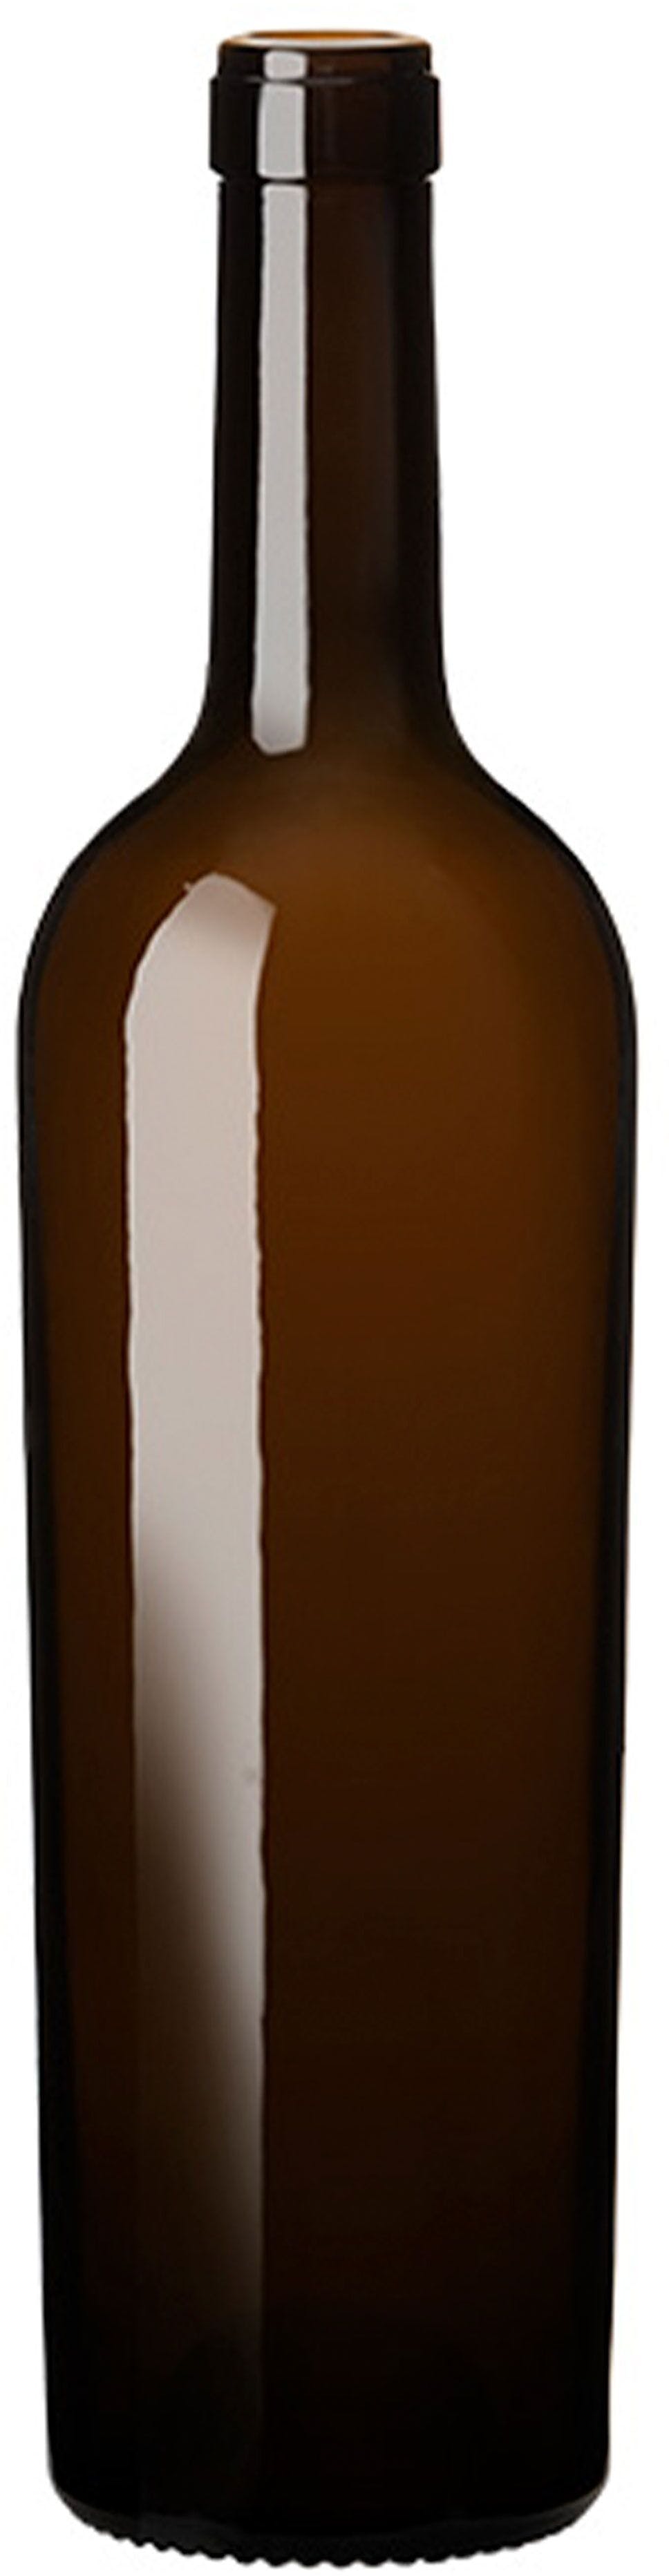 Botella BORD 750 VINTAGE C313 S VG